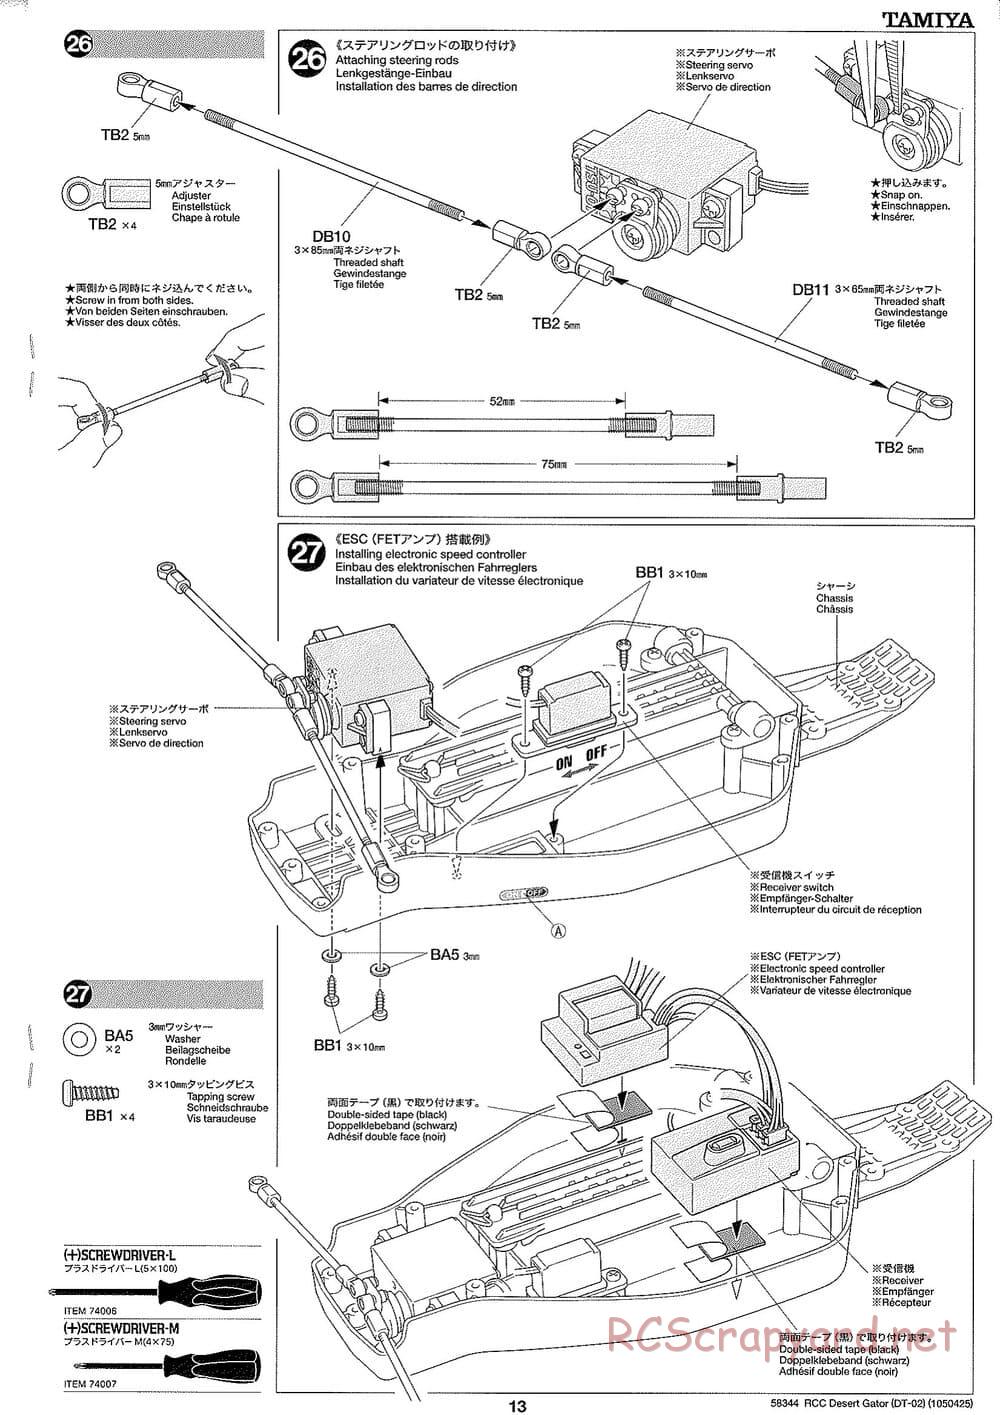 Tamiya - Desert Gator Chassis - Manual - Page 13